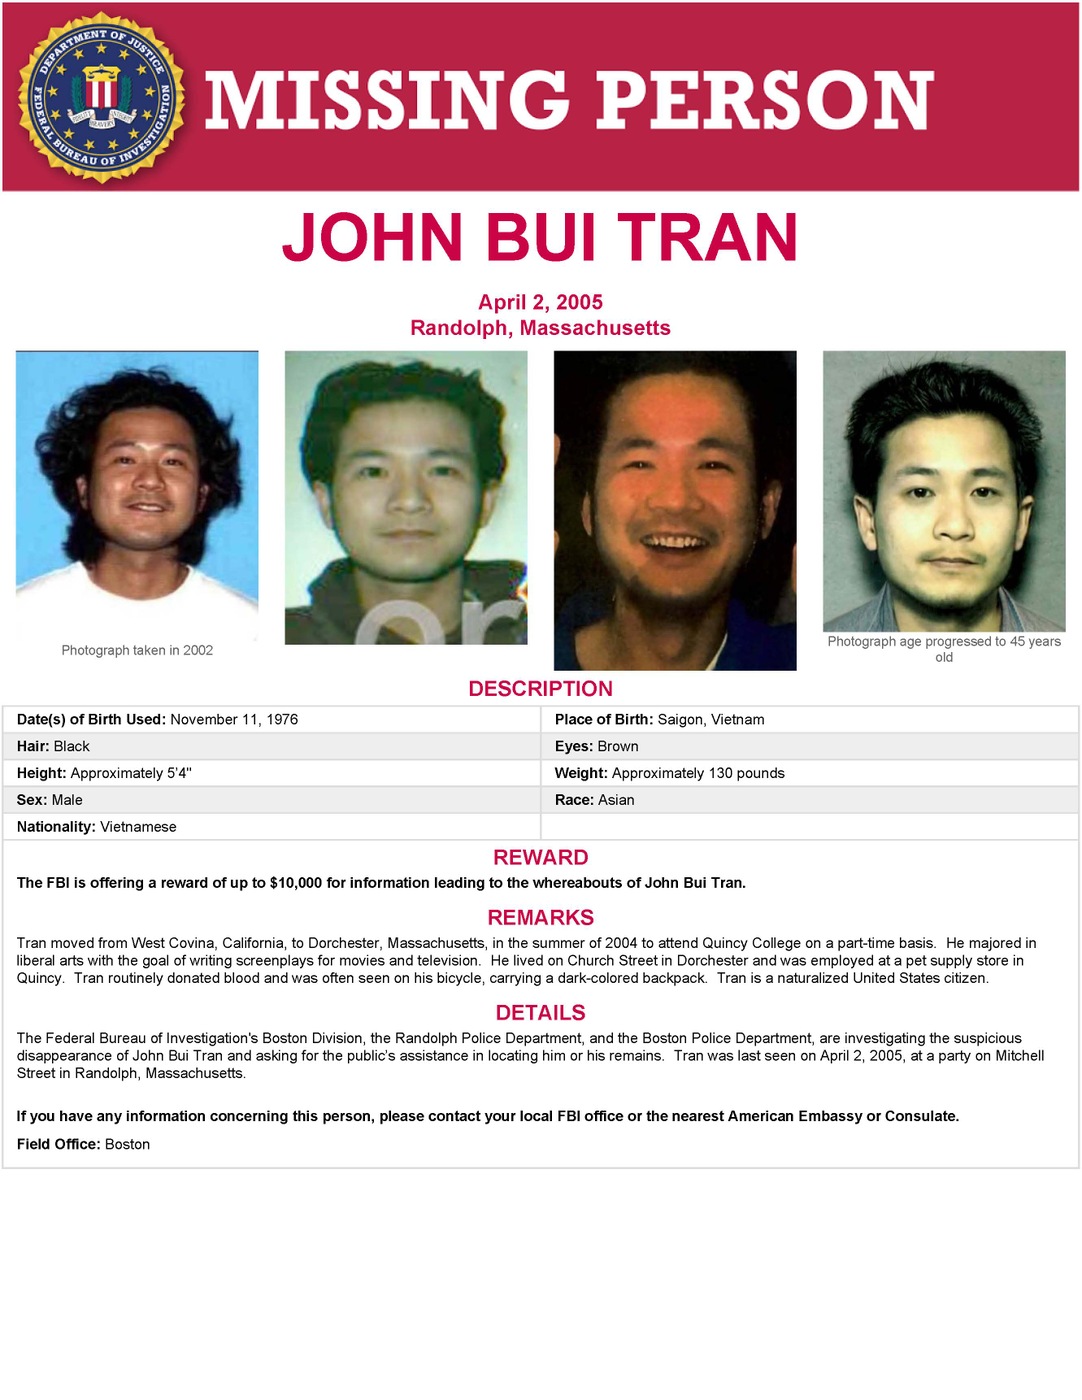 Missing person poster for John Bui Tran